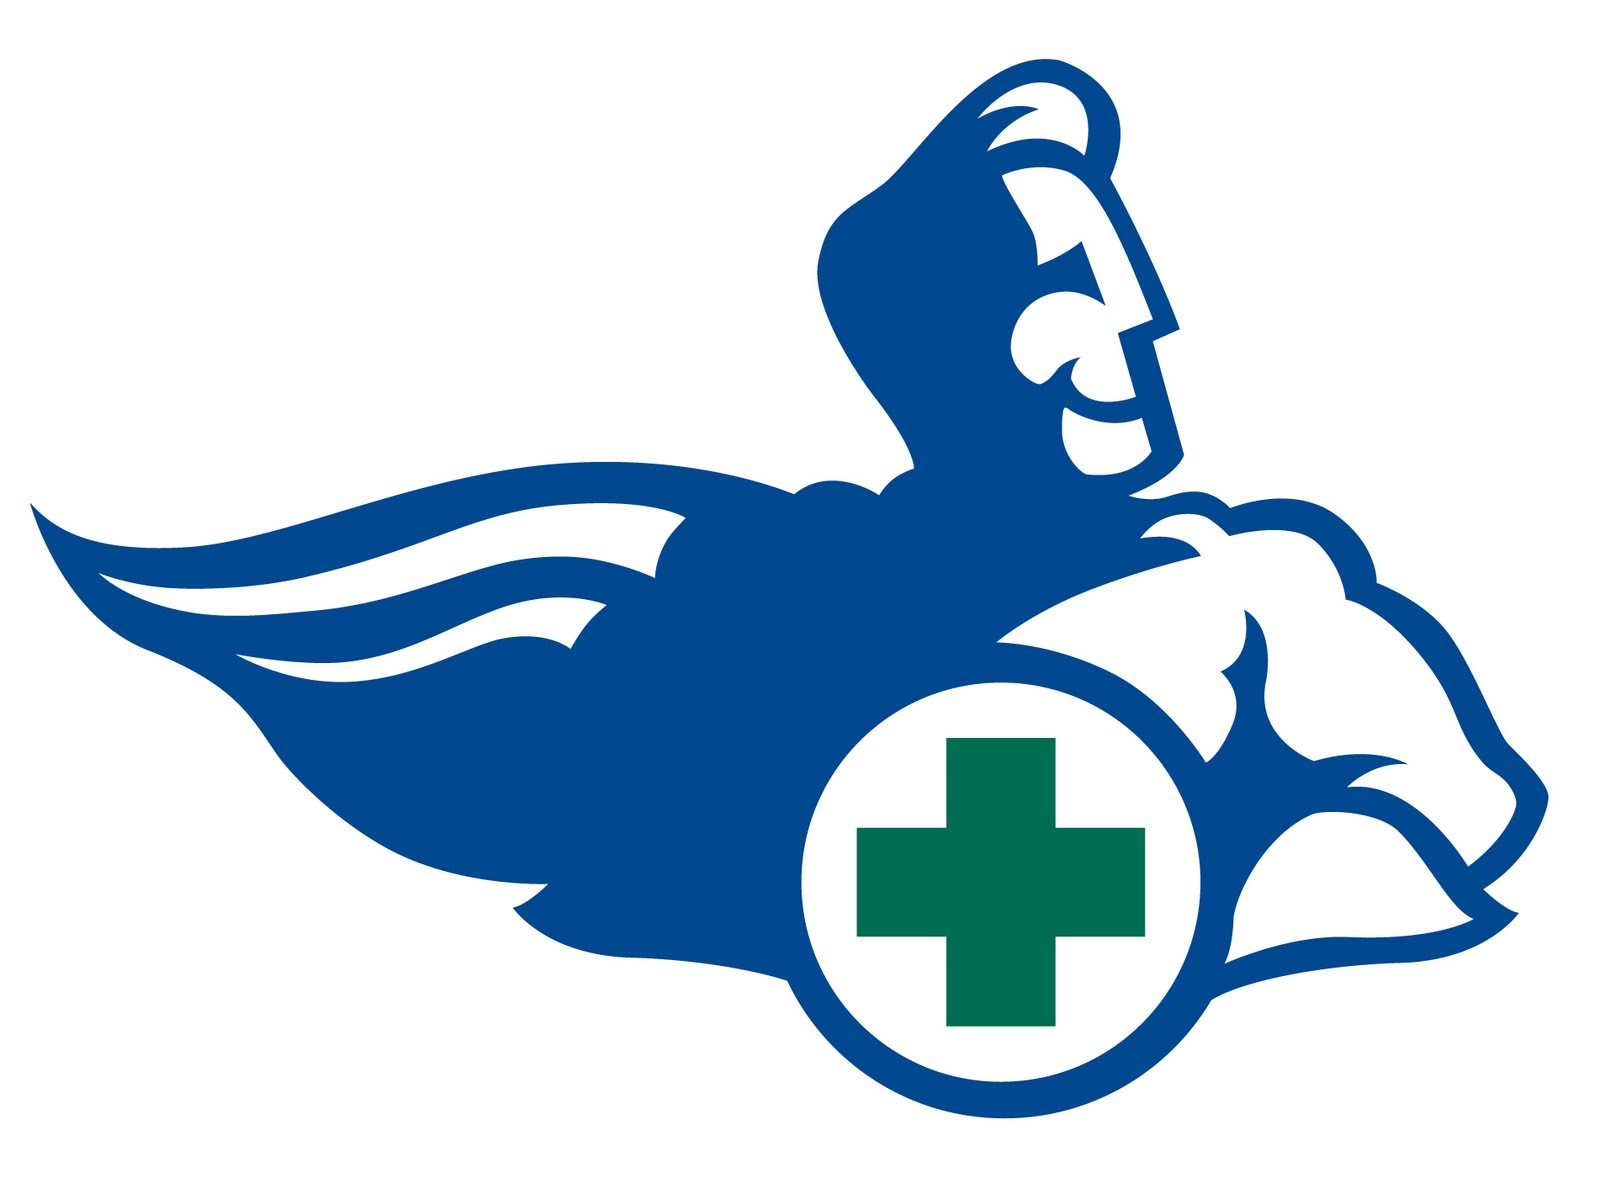 Tara Hale Illustration: Medical supplies delivery logo - ClipArt ...